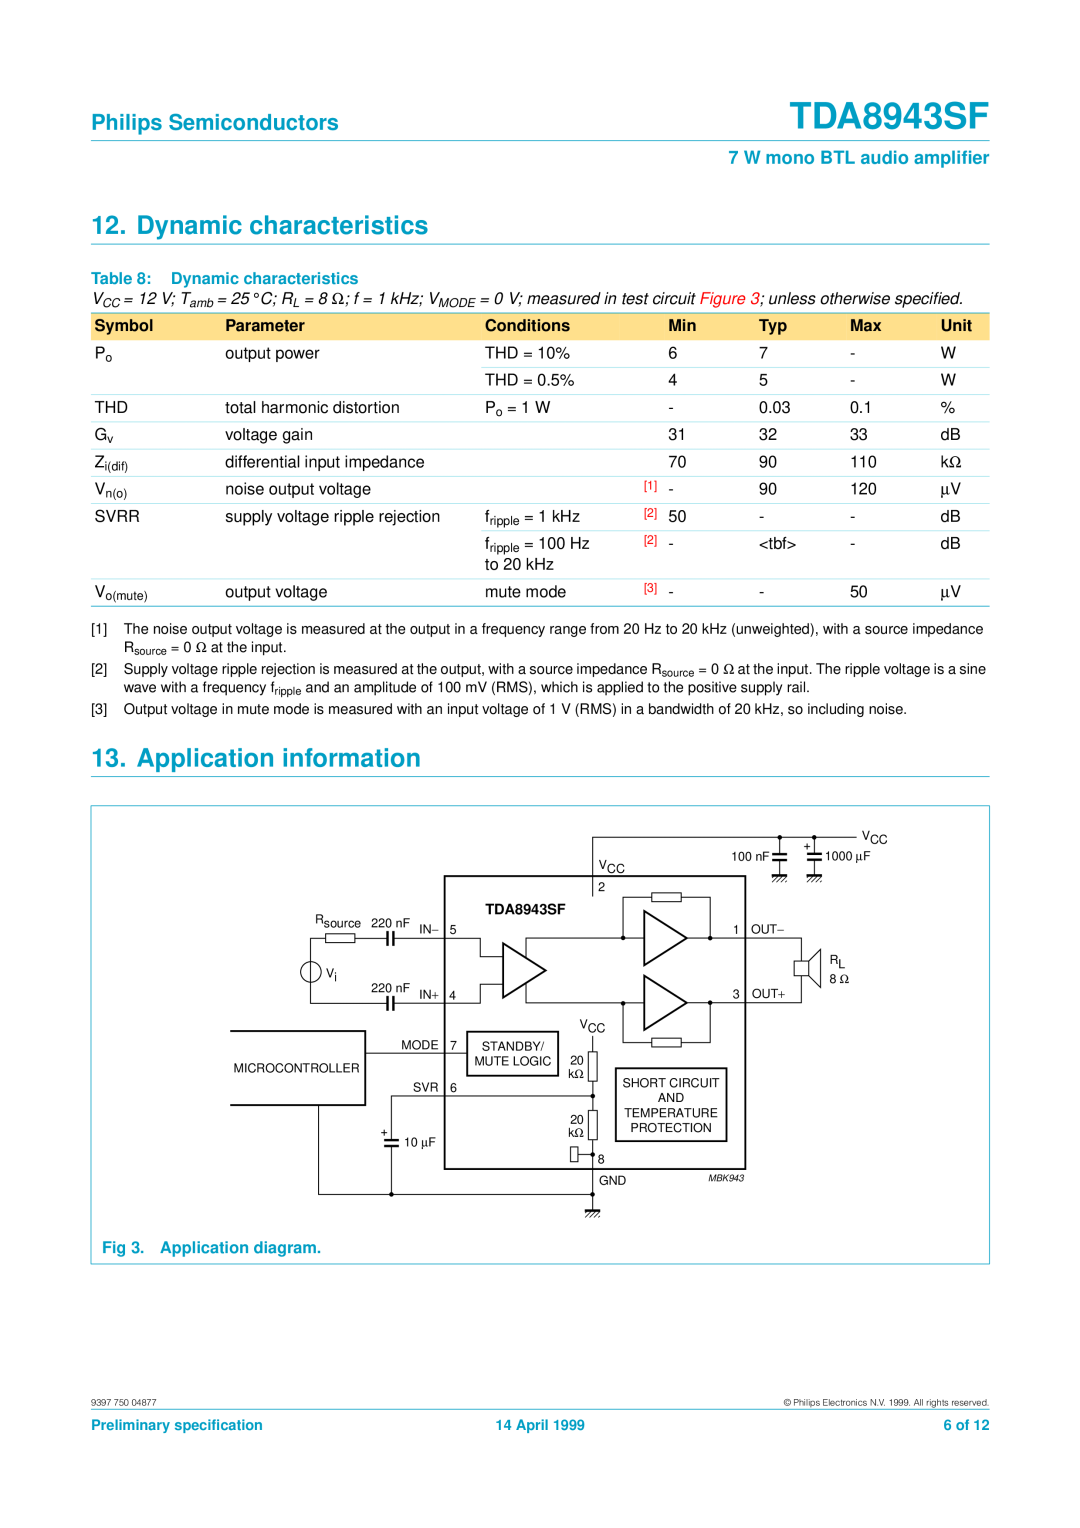 Philips TDA8943SF Dynamic characteristics, Application information, Philips Semiconductors, W mono BTL audio ampliﬁer 